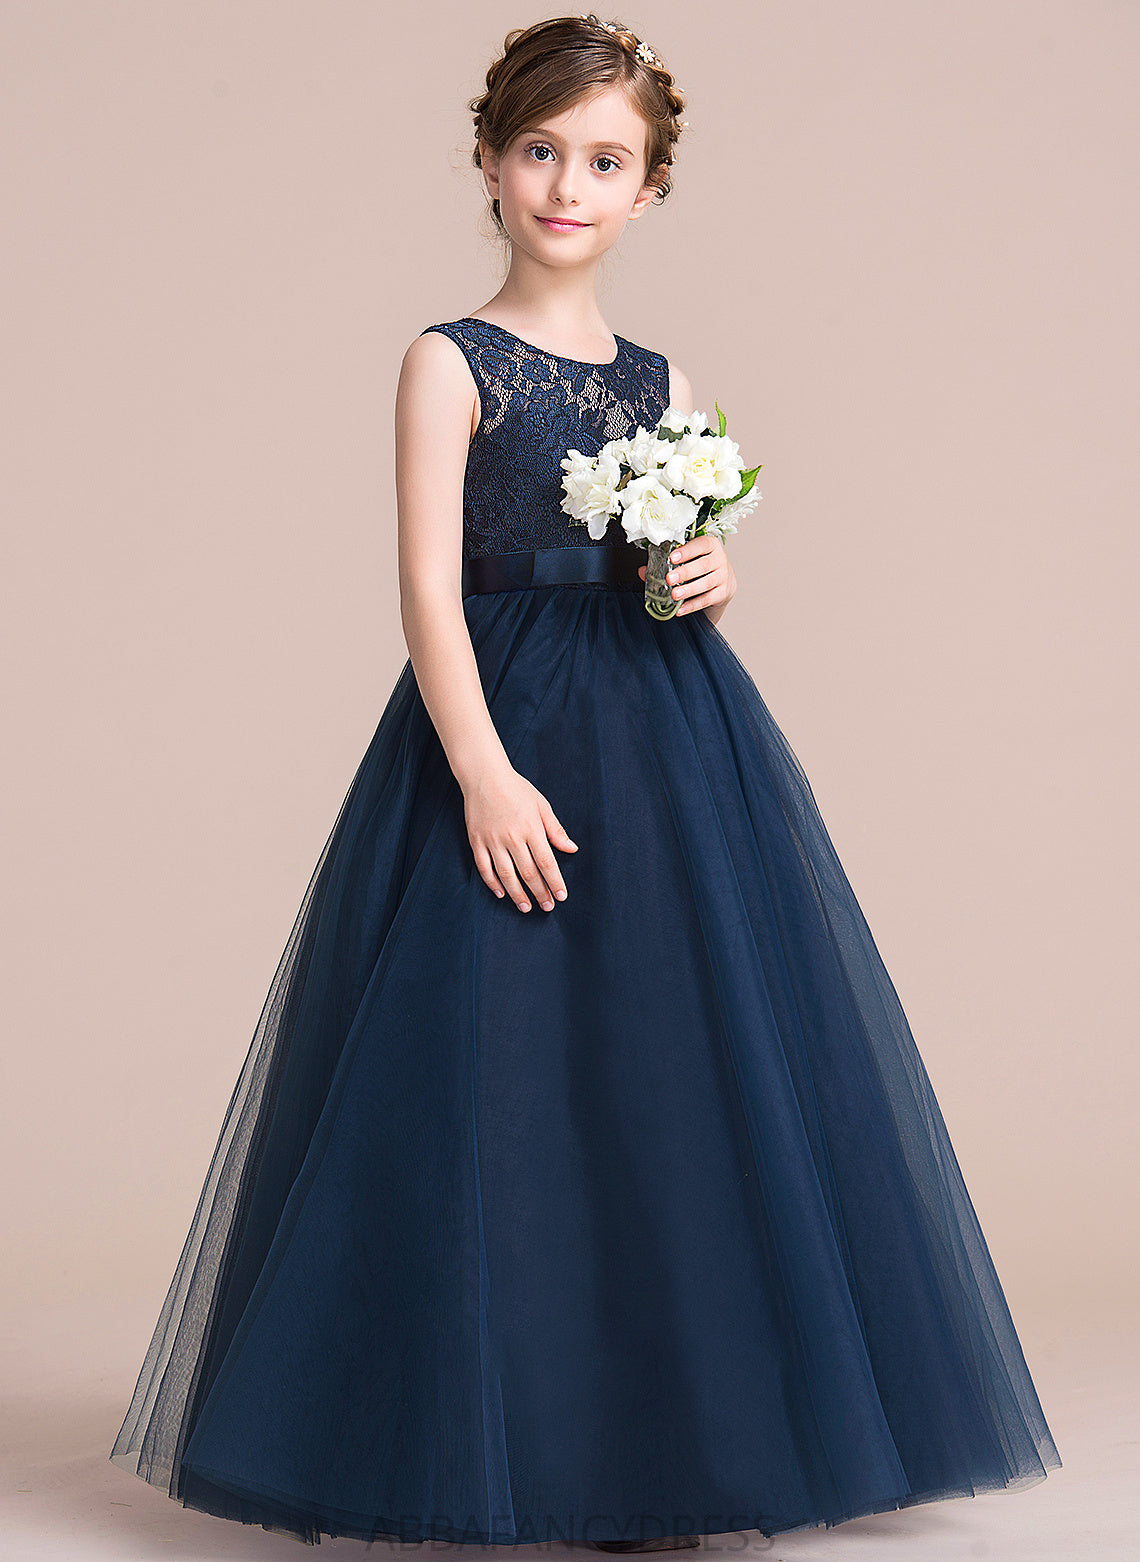 Nevaeh Junior Bridesmaid Dresses Ball-Gown/PrincessScoopNeckFloor-LengthTulleJuniorBridesmaidDressWithSash#126265